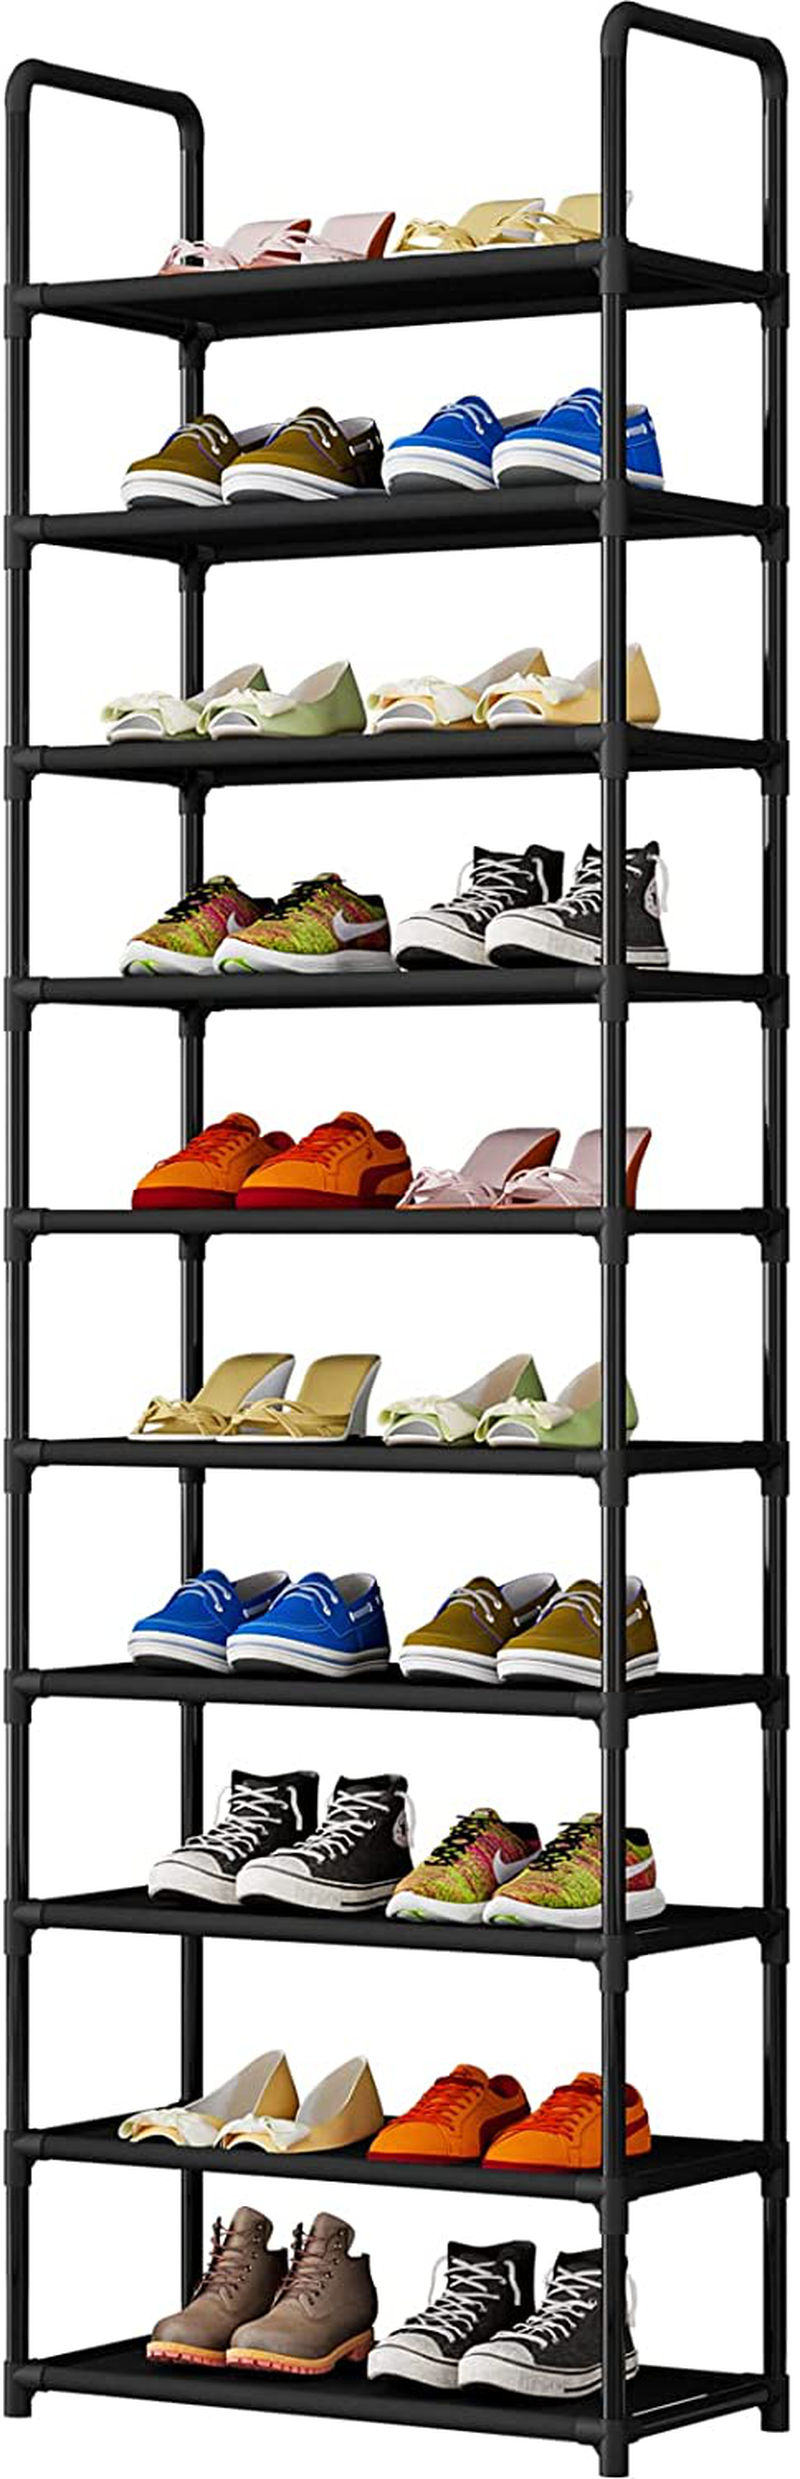 LINZINAR Shoe Rack Organizer 10 Tier Space Saving Shoe Shelf Storage Sturdy Metal Shoe Tower for Closet Entryway Bedroom, Black Furniture > Cabinets & Storage > Armoires & Wardrobes LINZINAR Black 10 Tier 